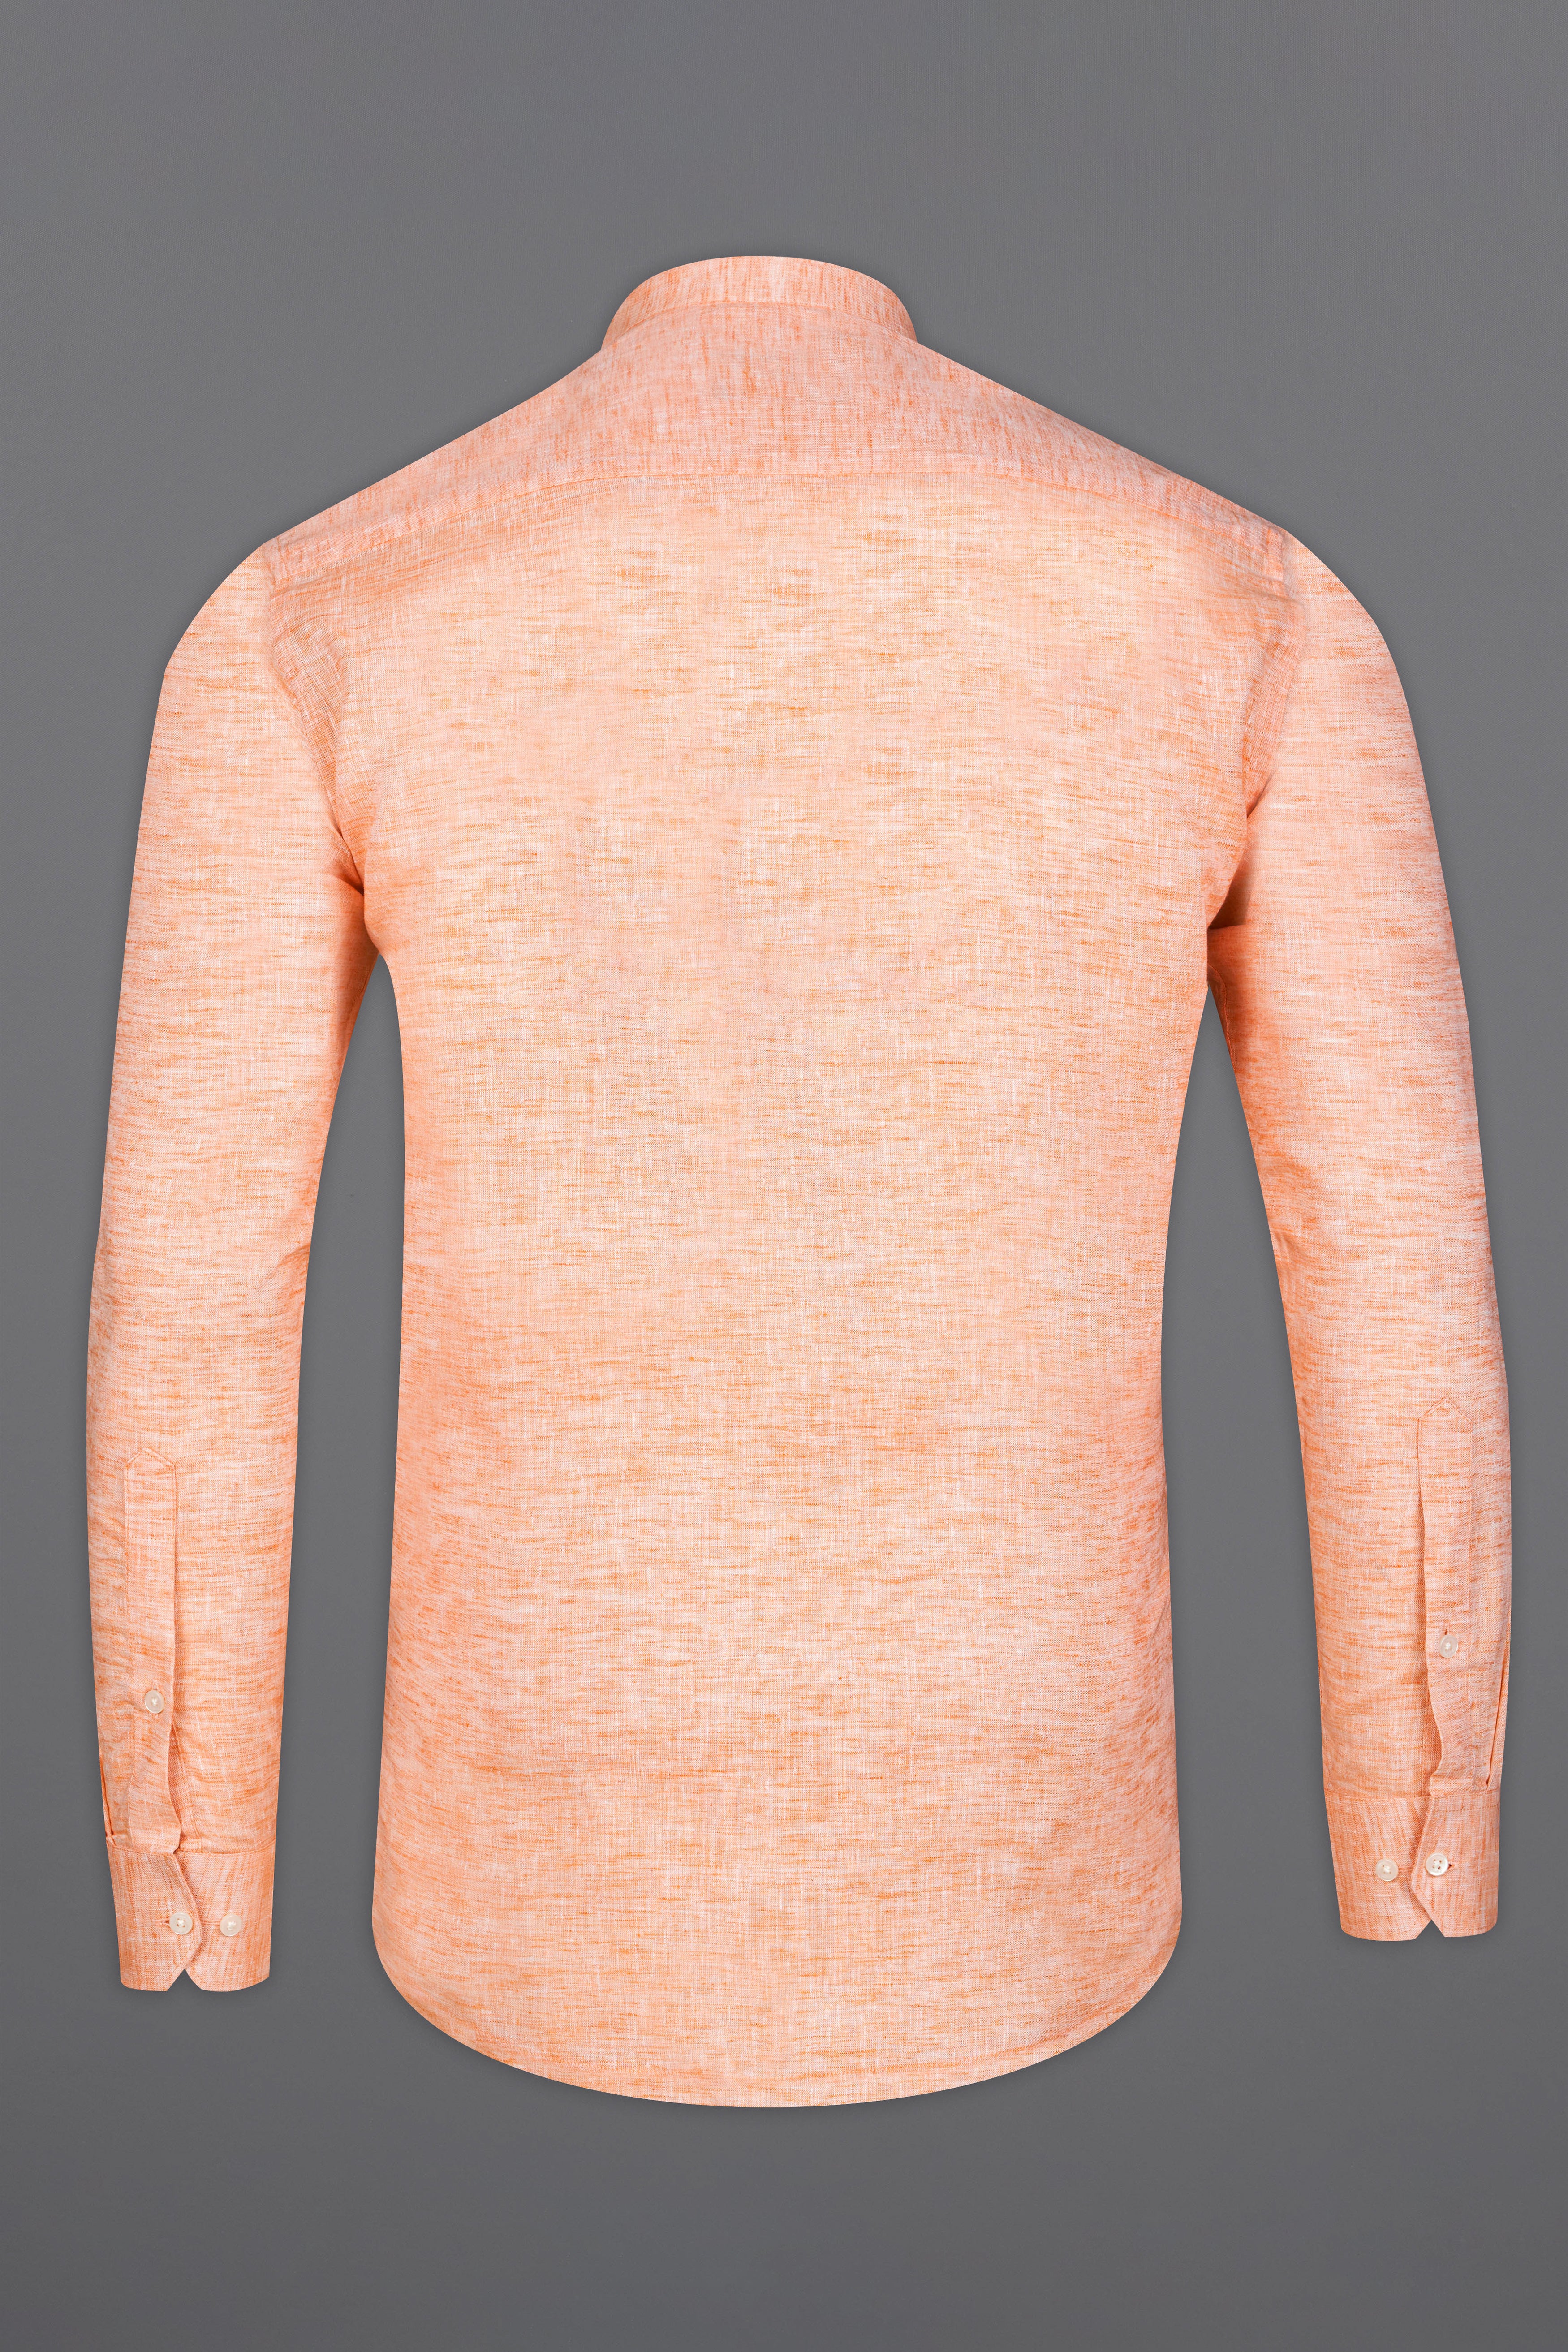 Tacao Peach Lord Hanuman Hand Painted Luxurious Linen Designer Shirt